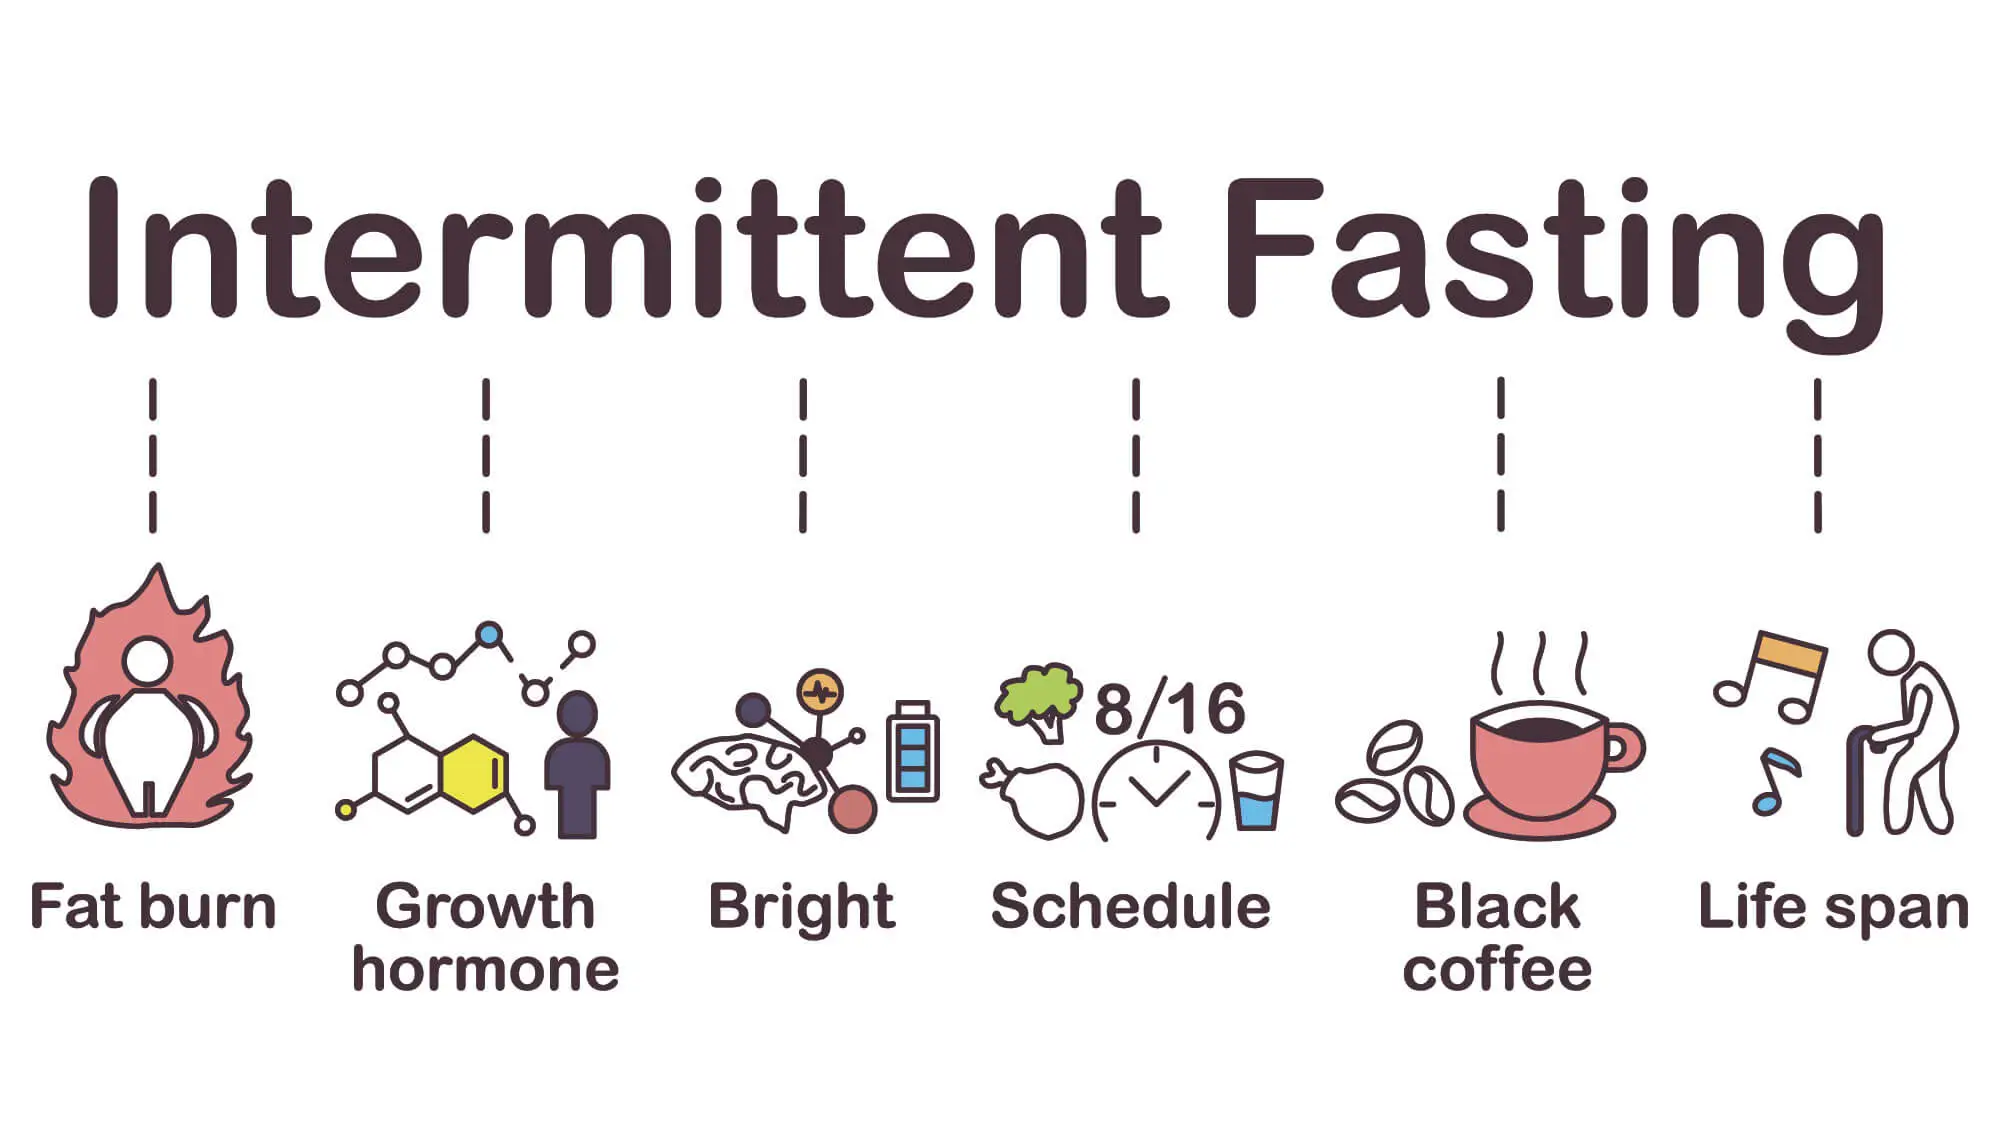 Benefits of Intermitten Fasting